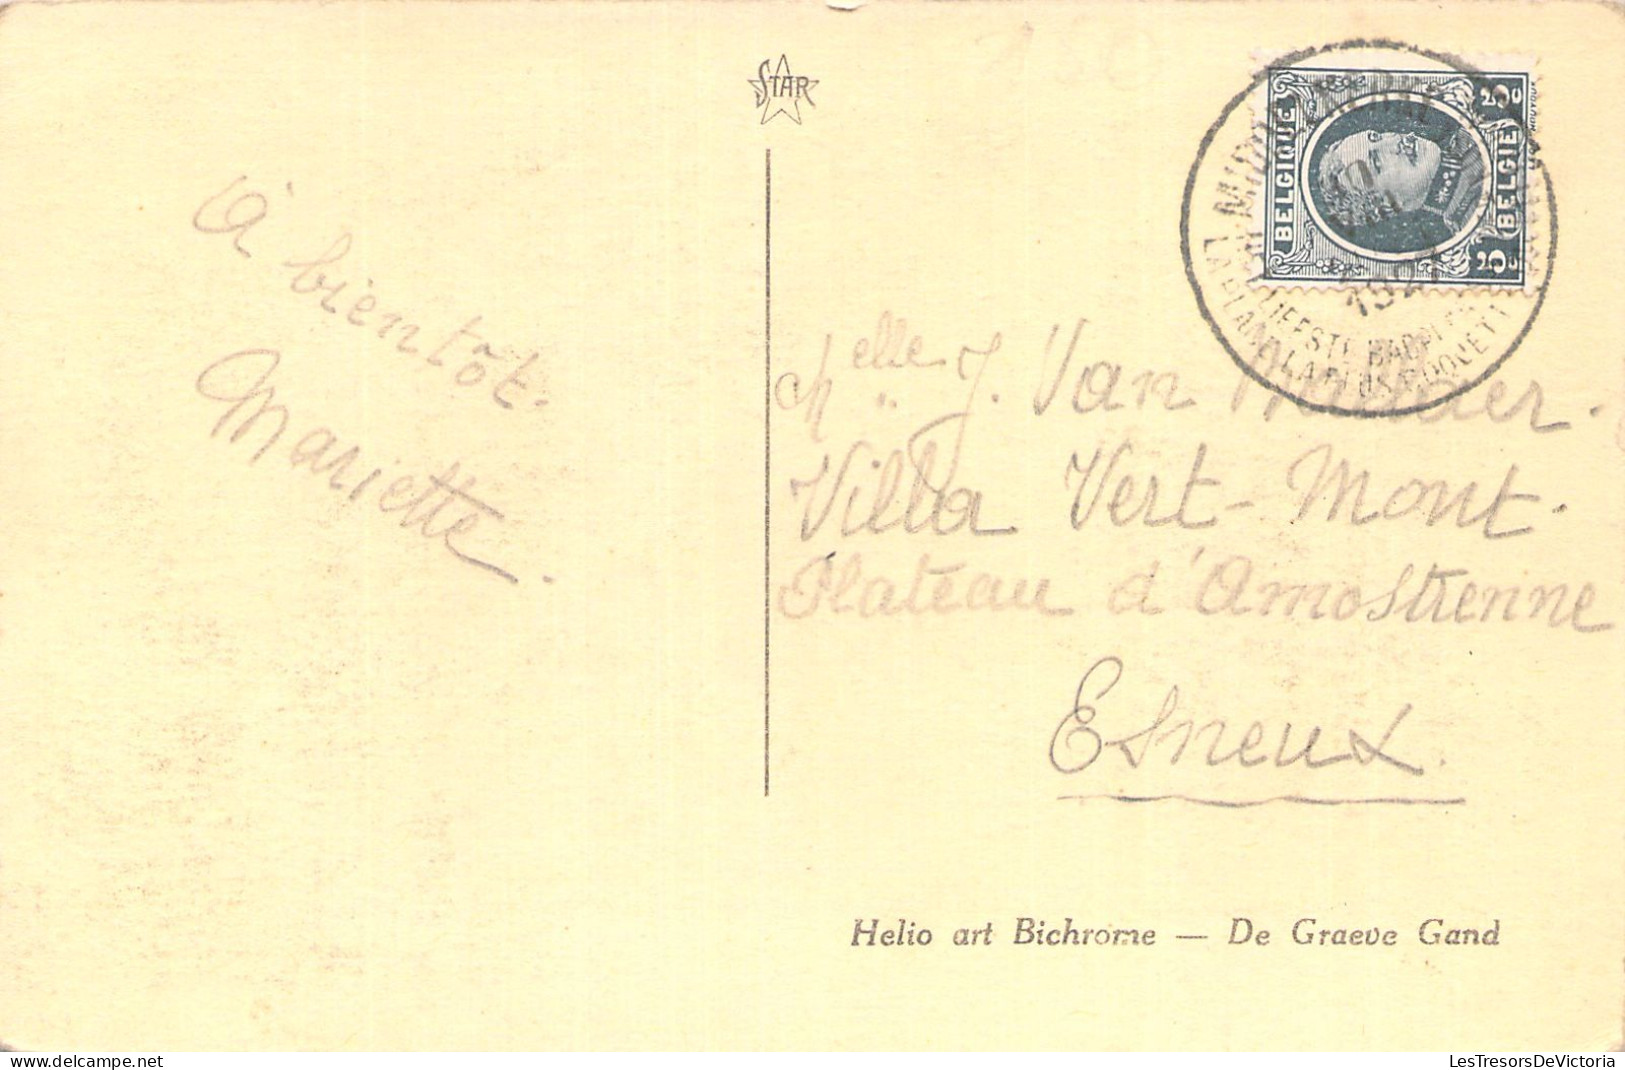 BELGIQUE - MIDDELKERKE - L'institut Wetendorf Et La Rue Van Hinsberg - Carte Postale Ancienne - Middelkerke